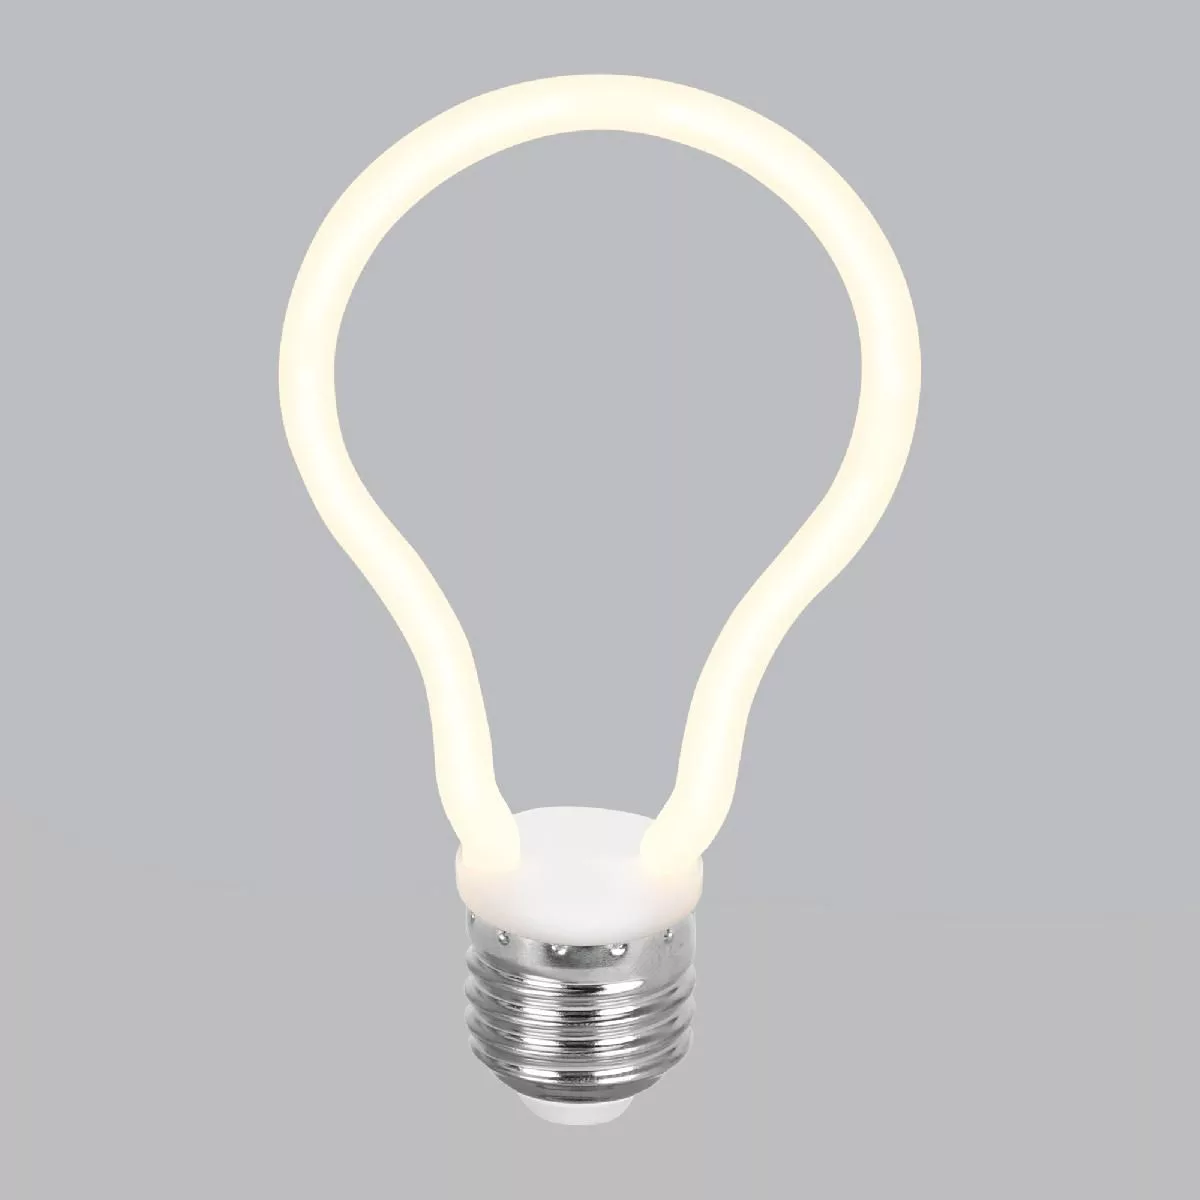 Контурная лампа Decor filament 4 Вт 2700K E27 Elektrostandard BL157